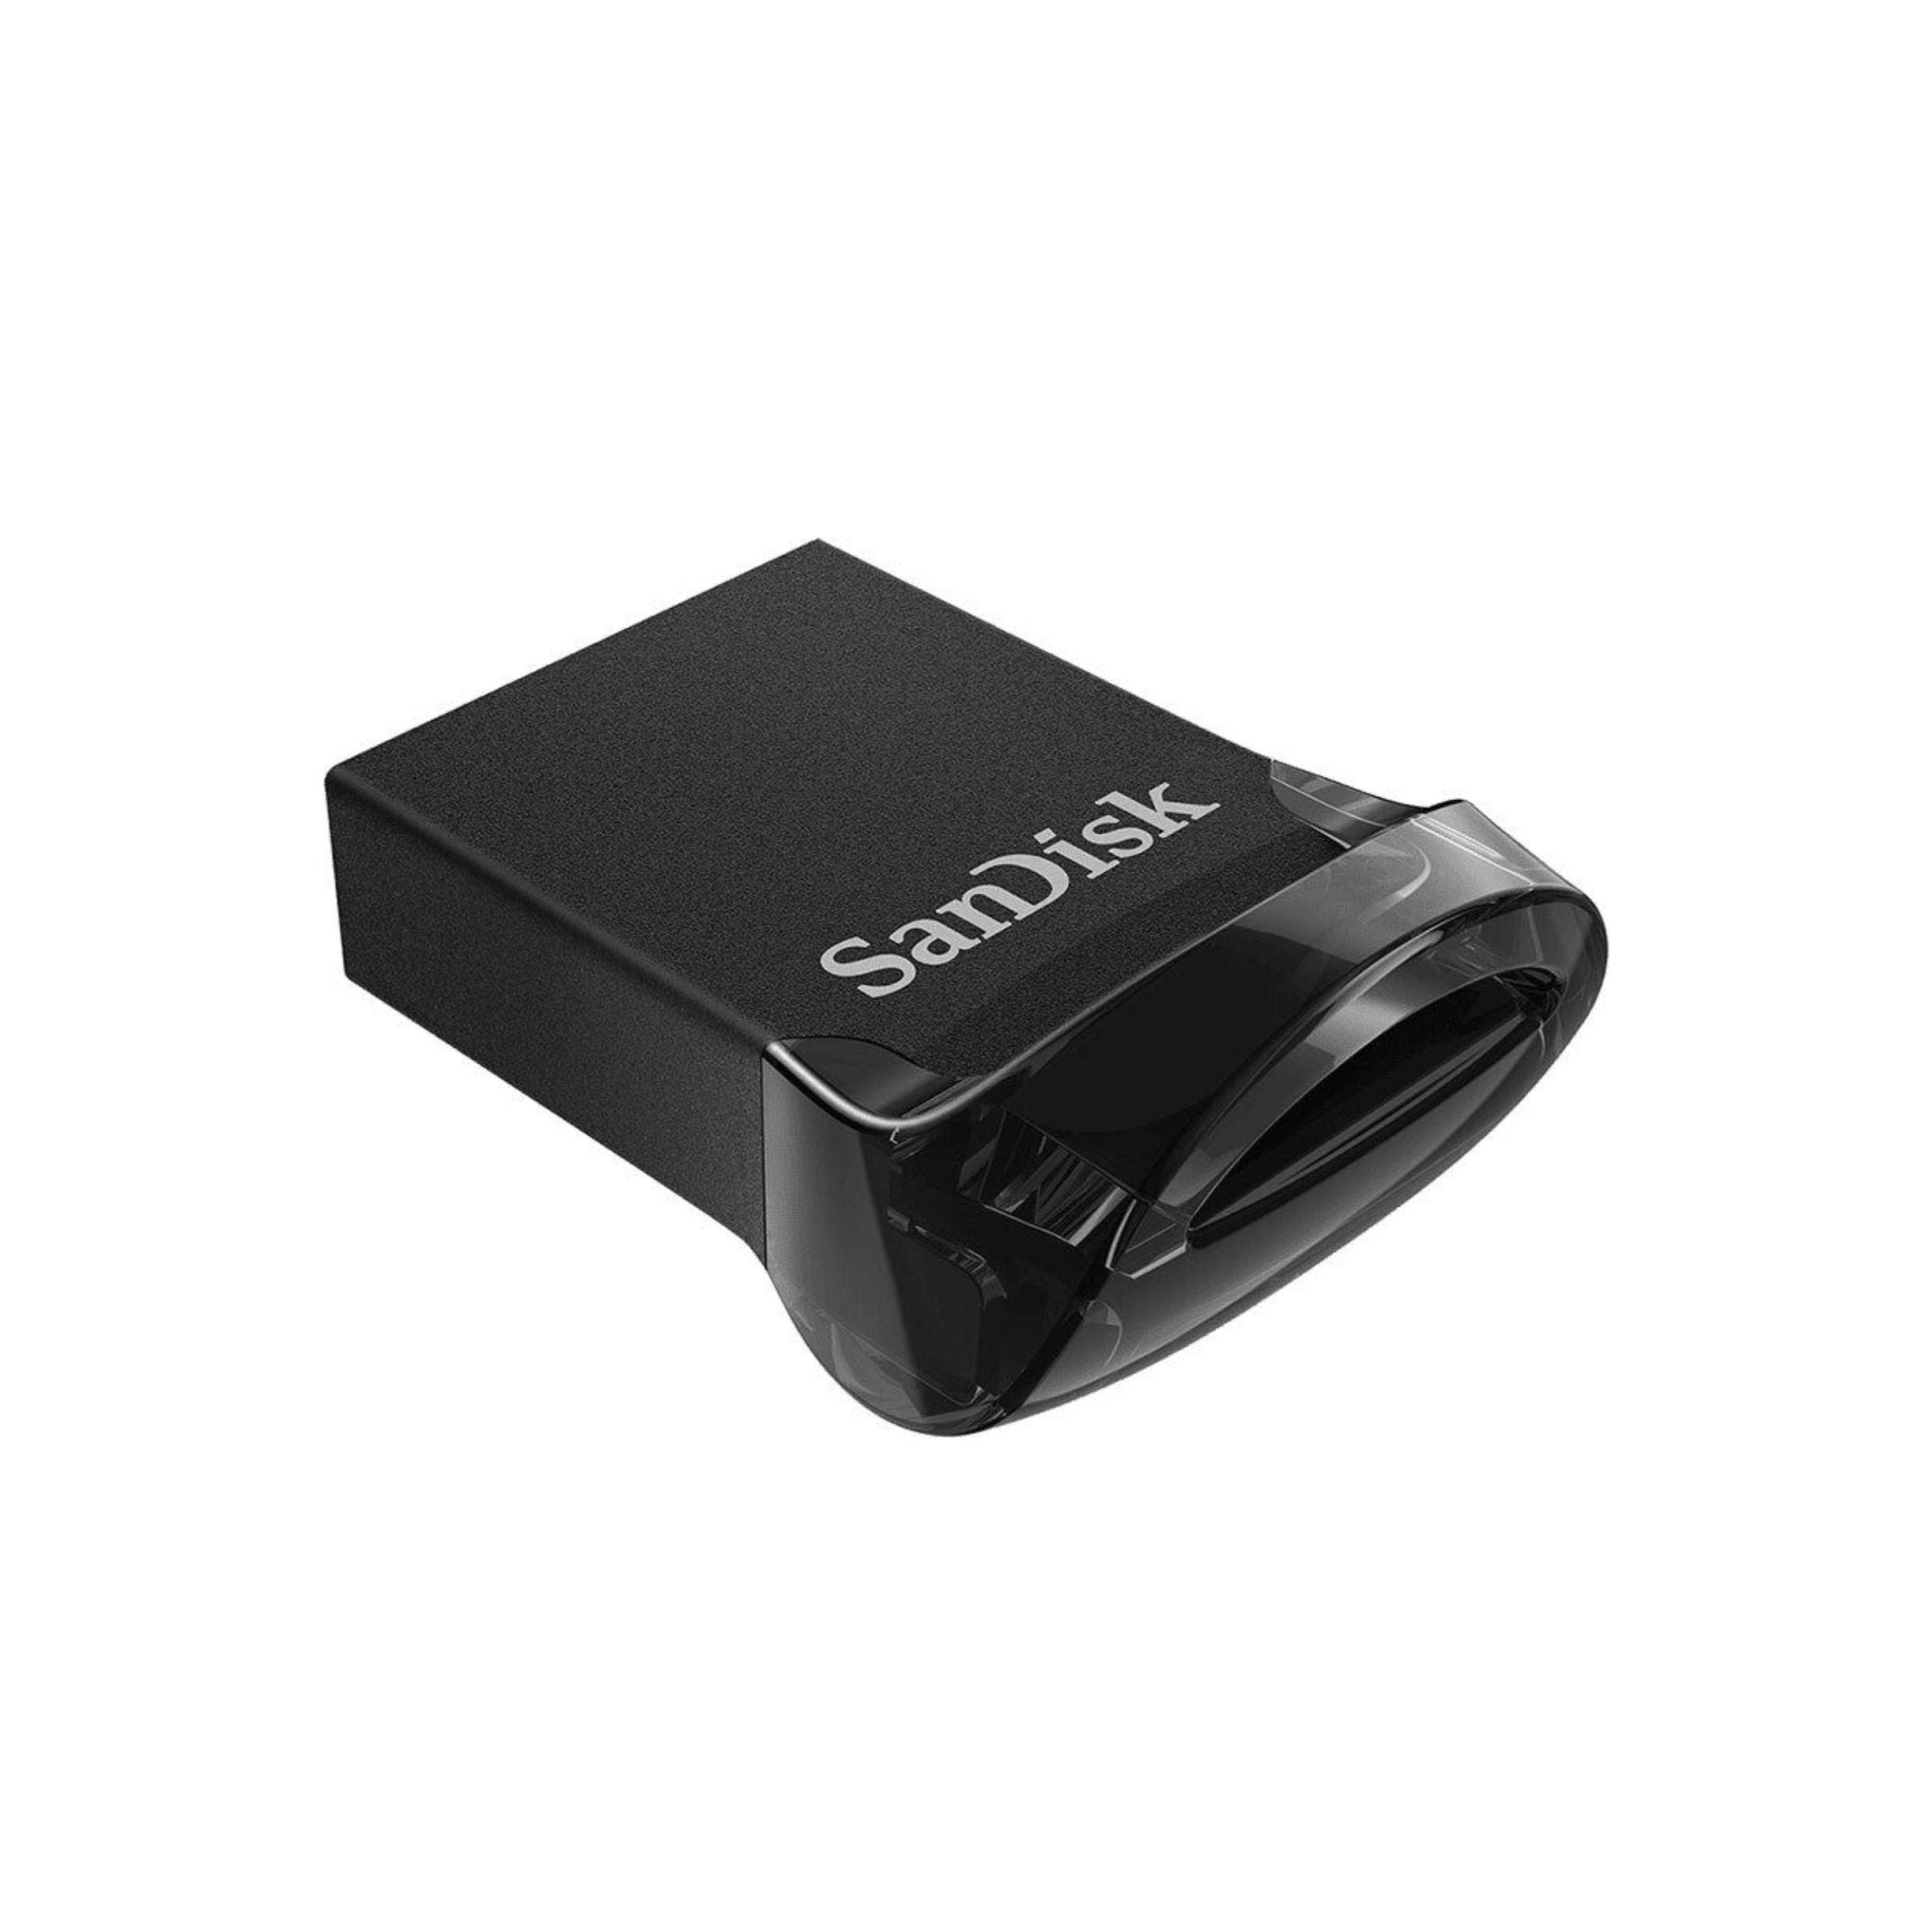 SanDisk Ultra Fit USB 3.0 Flash Stick Pen Memory Drive - Black